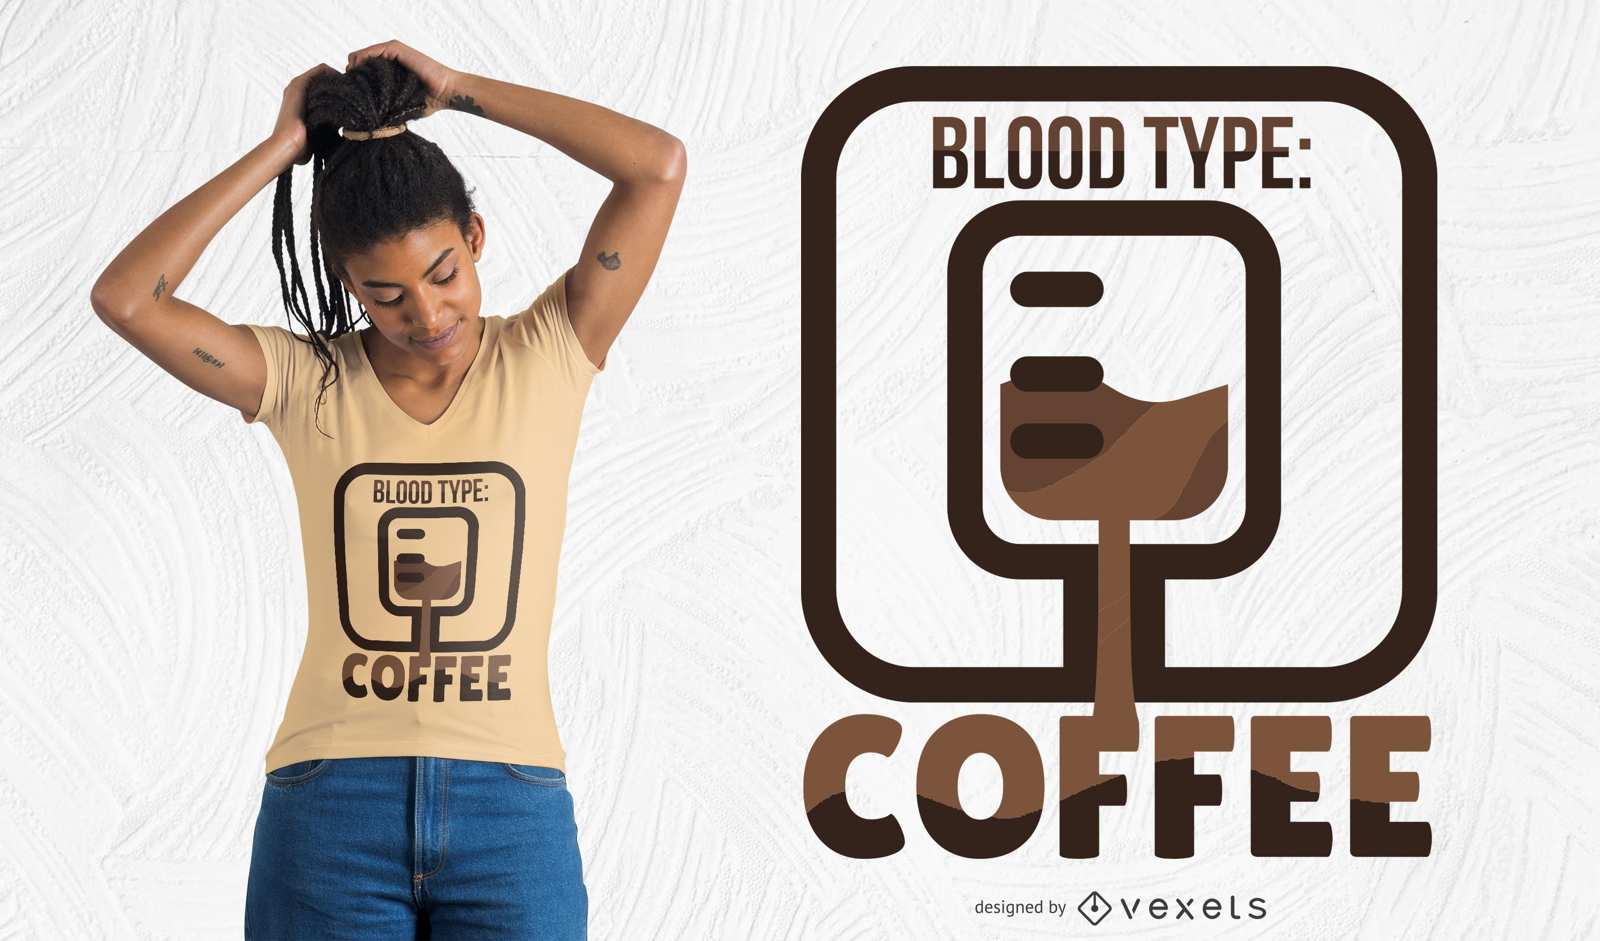 Blood type coffee t-shirt design